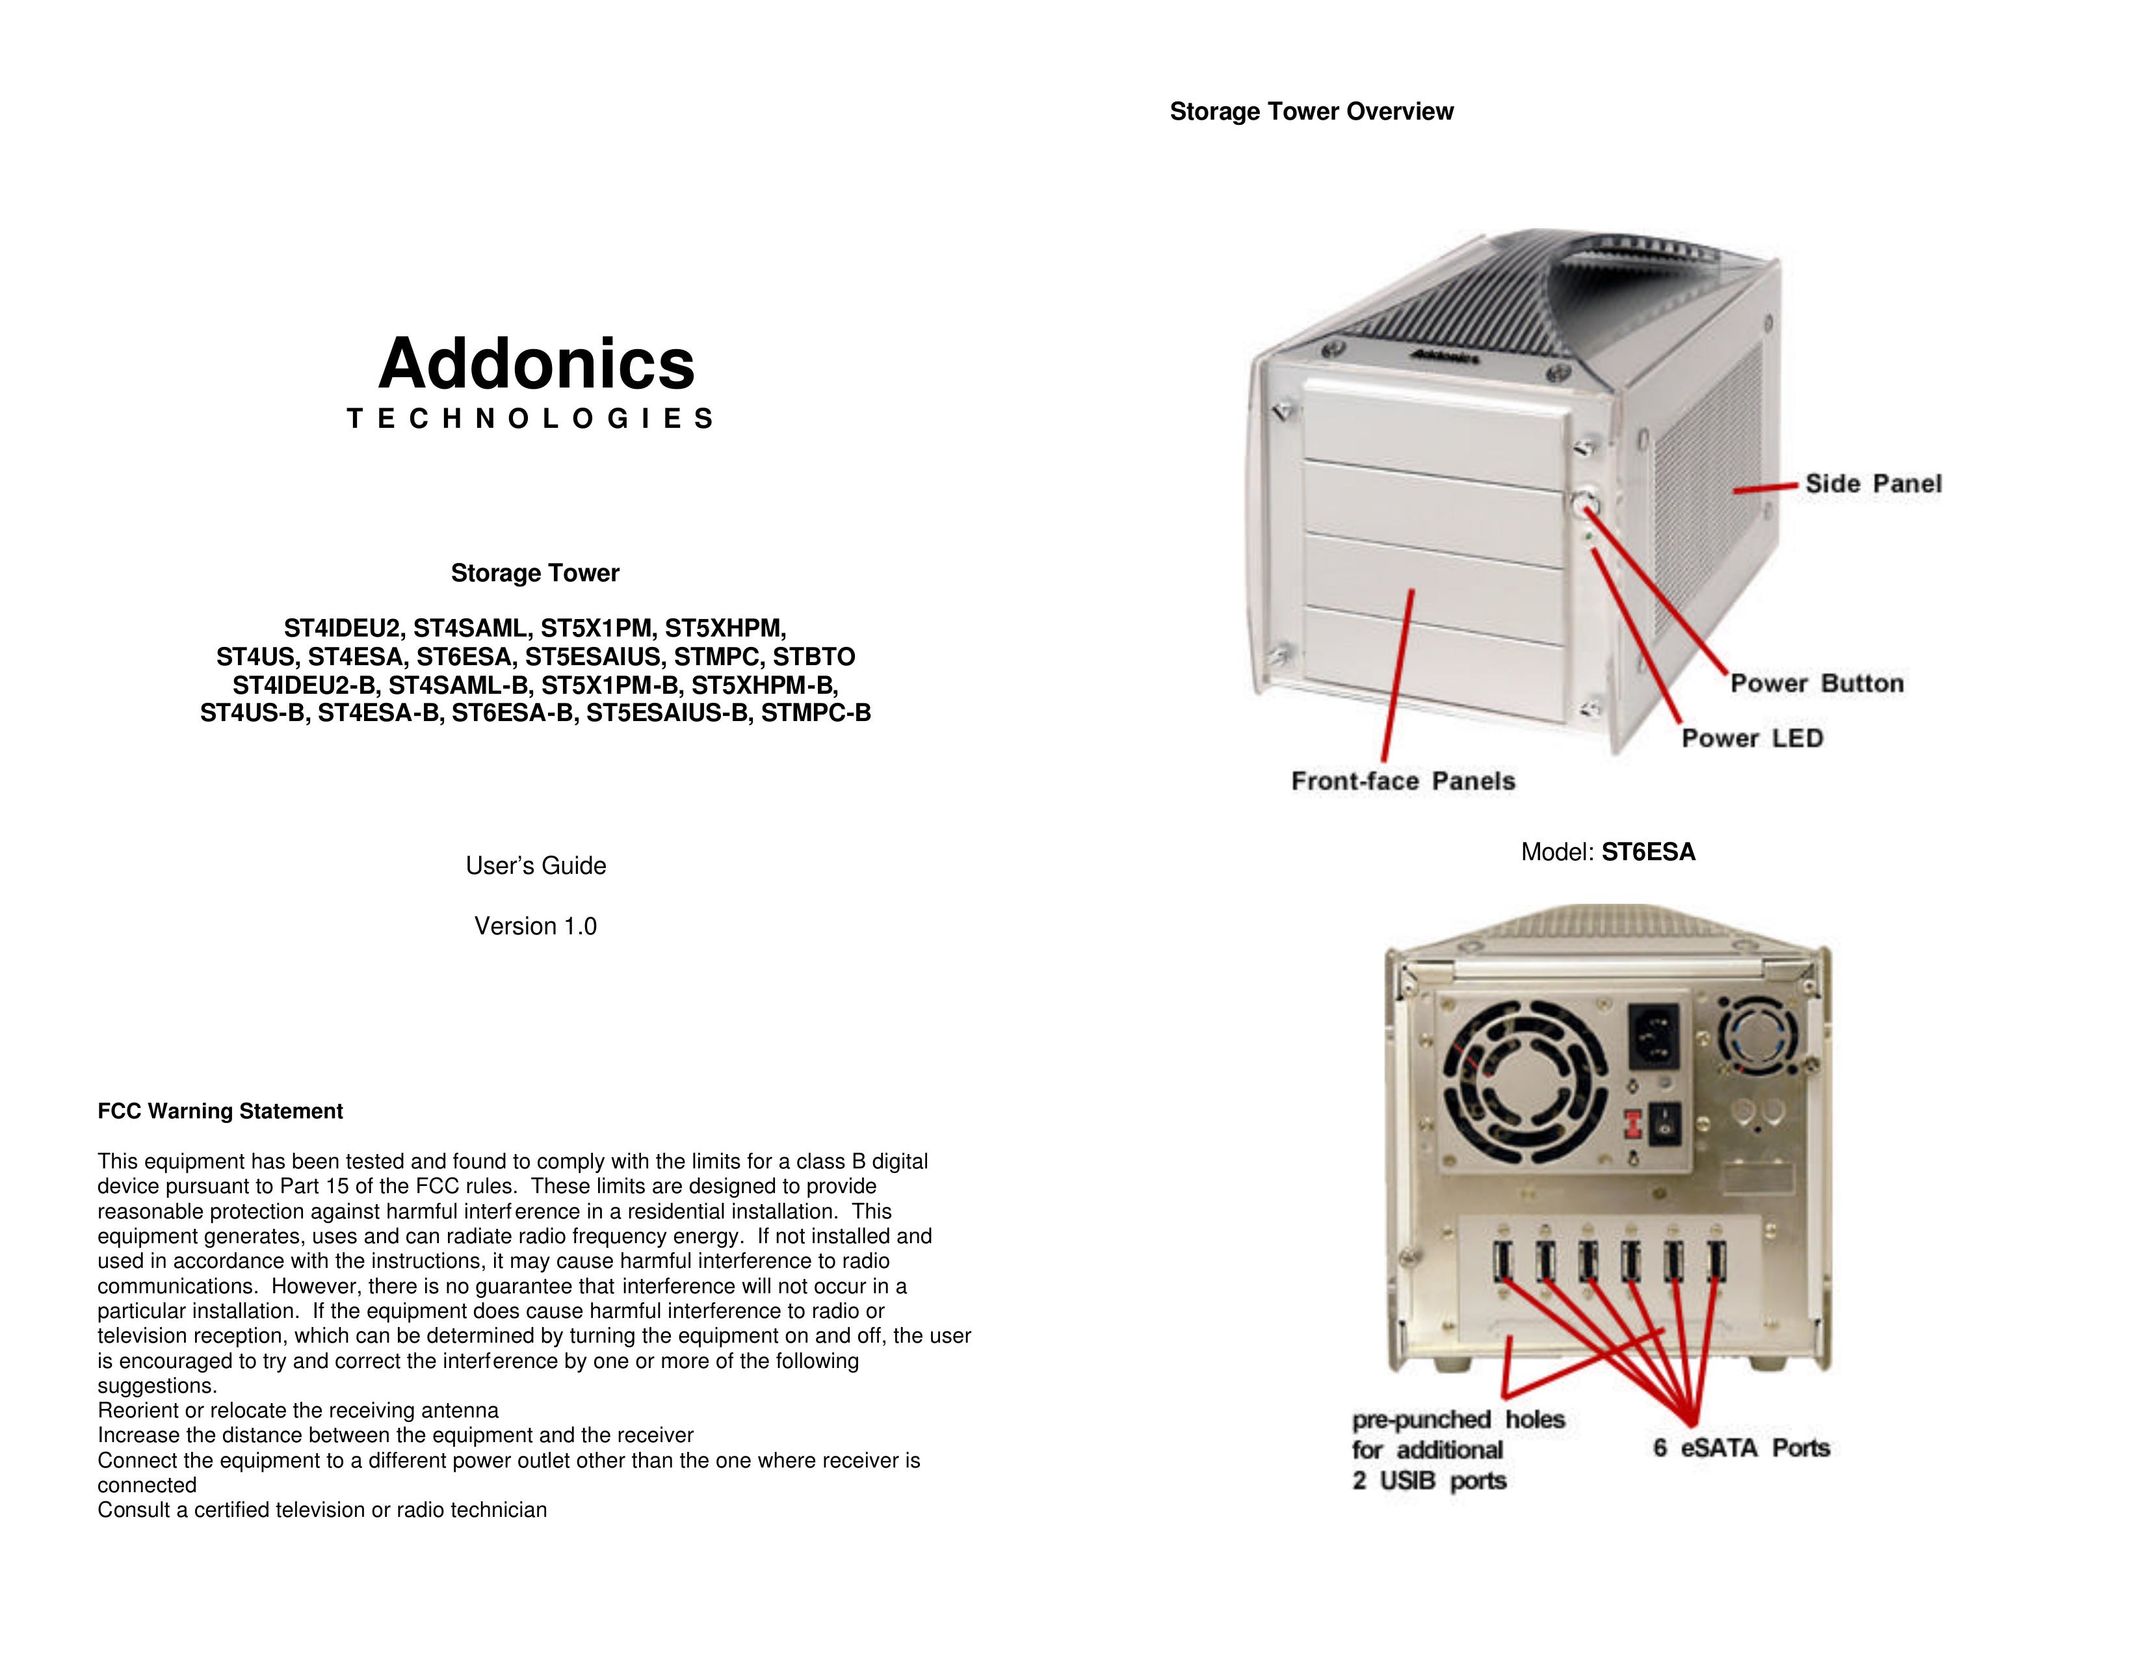 Addonics Technologies ST5XHPM-B Portable Media Storage User Manual